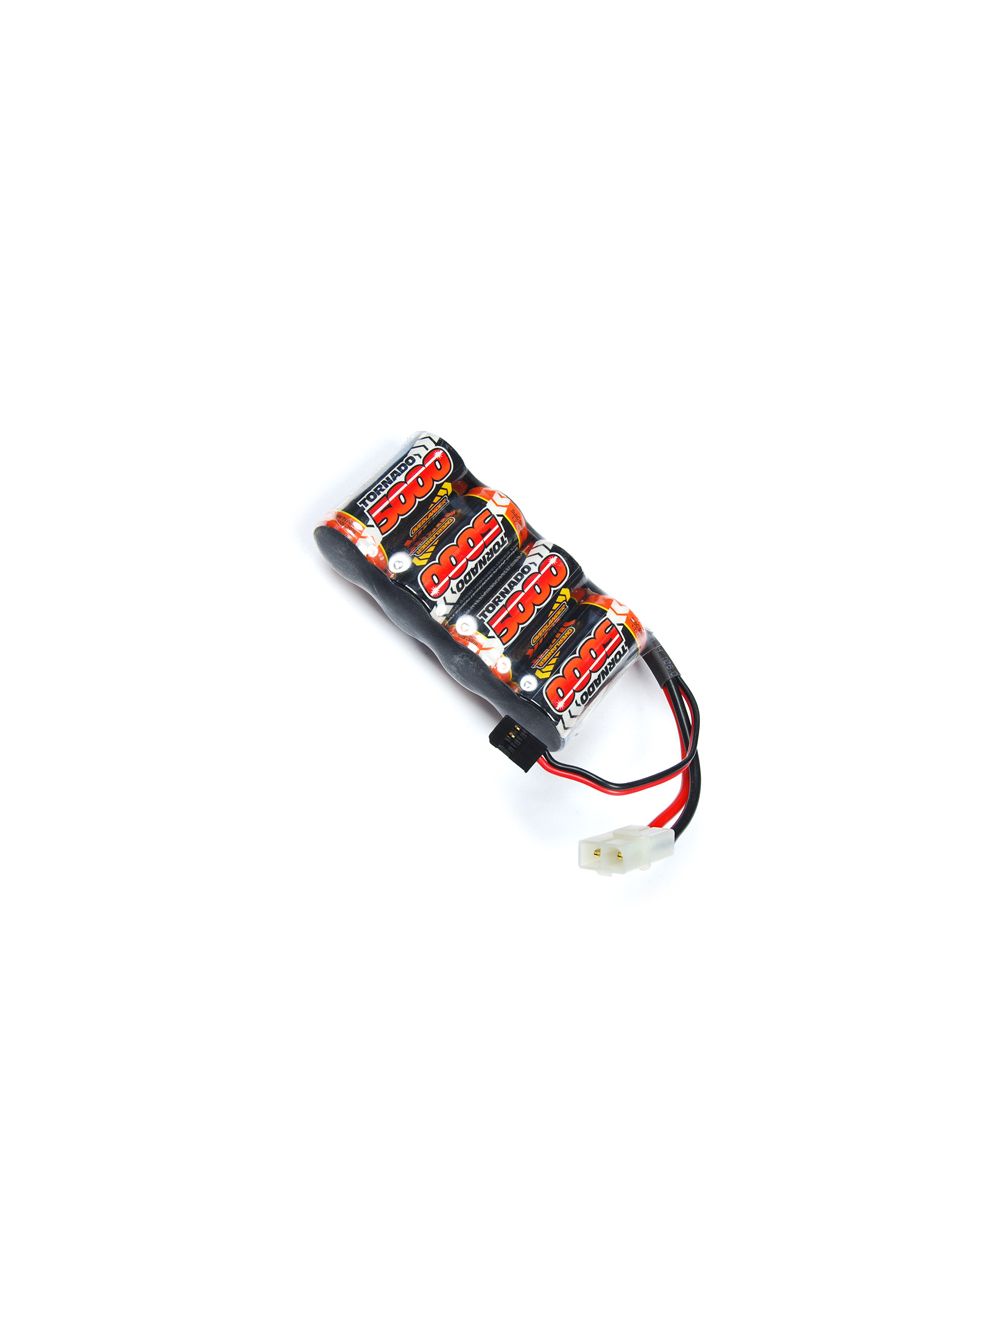 Overlander SubC 5000mAh 4.8V Flat Premium Sport NiMH Battery - Deans & JR Connector 1594